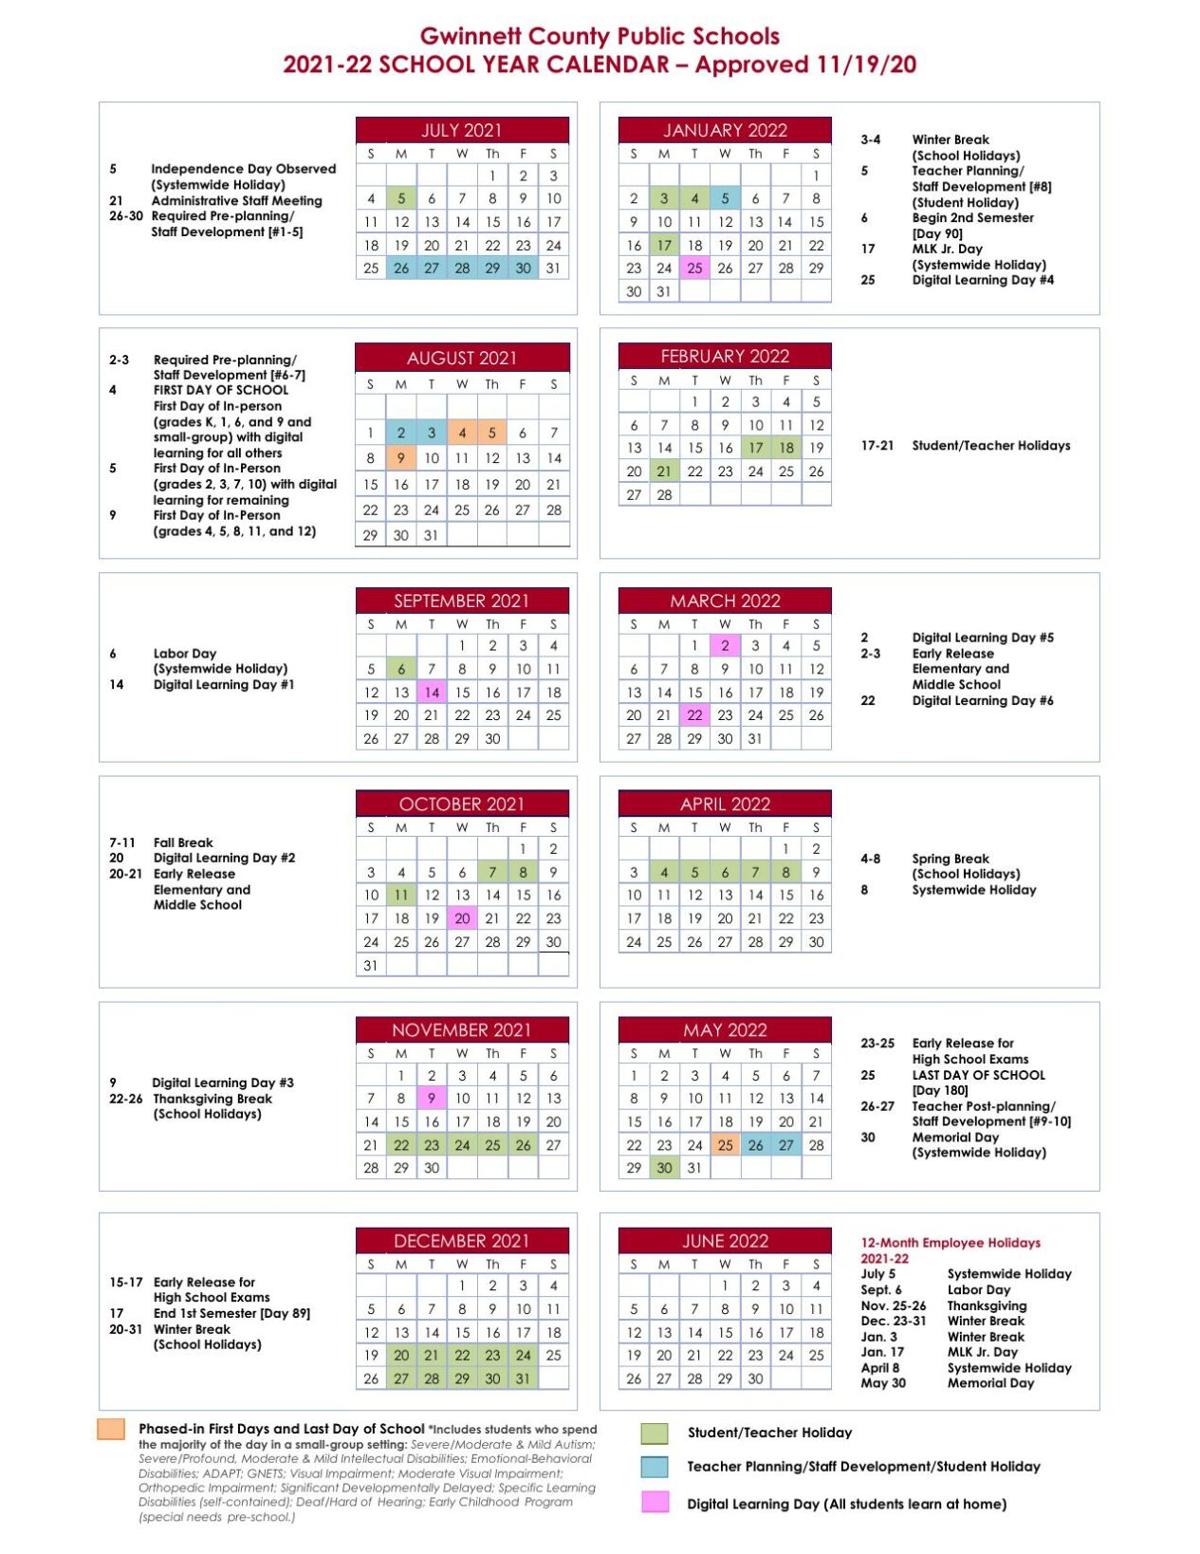 Gcps Calendar 2022 23 Gwinnett County Public Schools' 2021-2022 School Year Calendar | |  Gwinnettdailypost.com